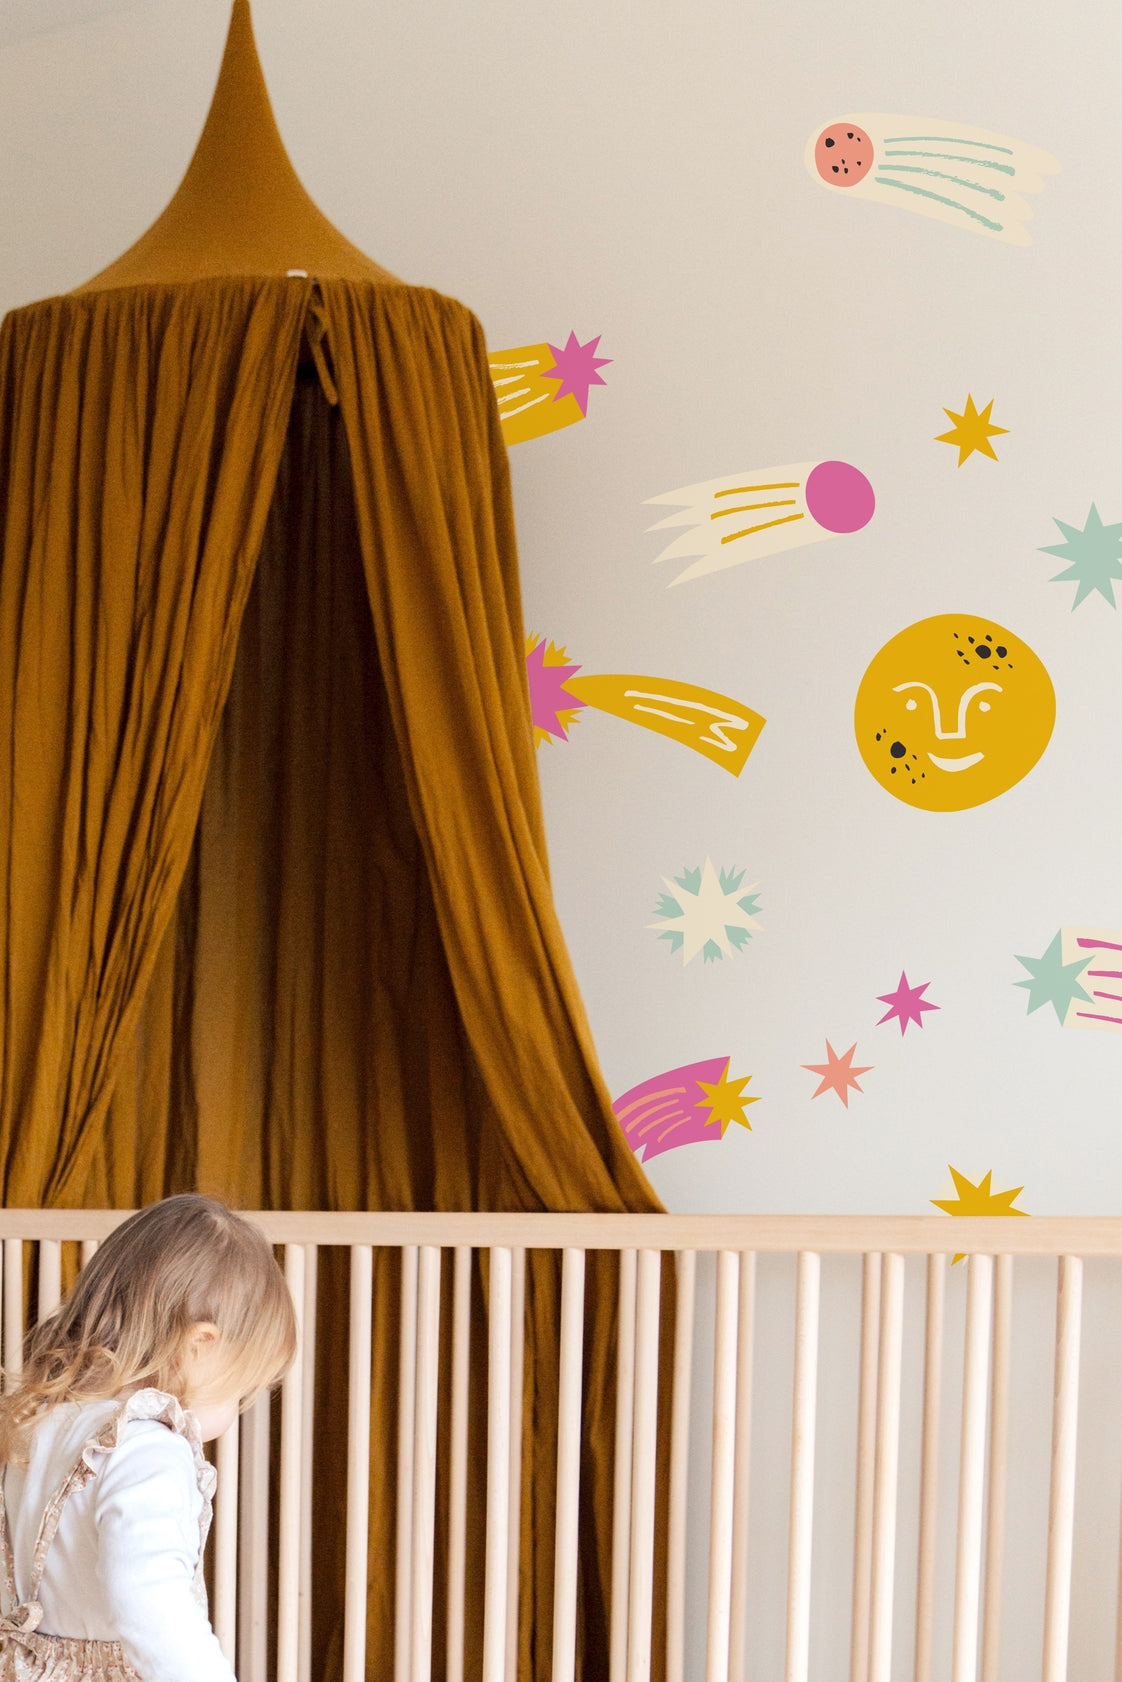 Moon and Stars - Kids Nursery Room Wall Sticker